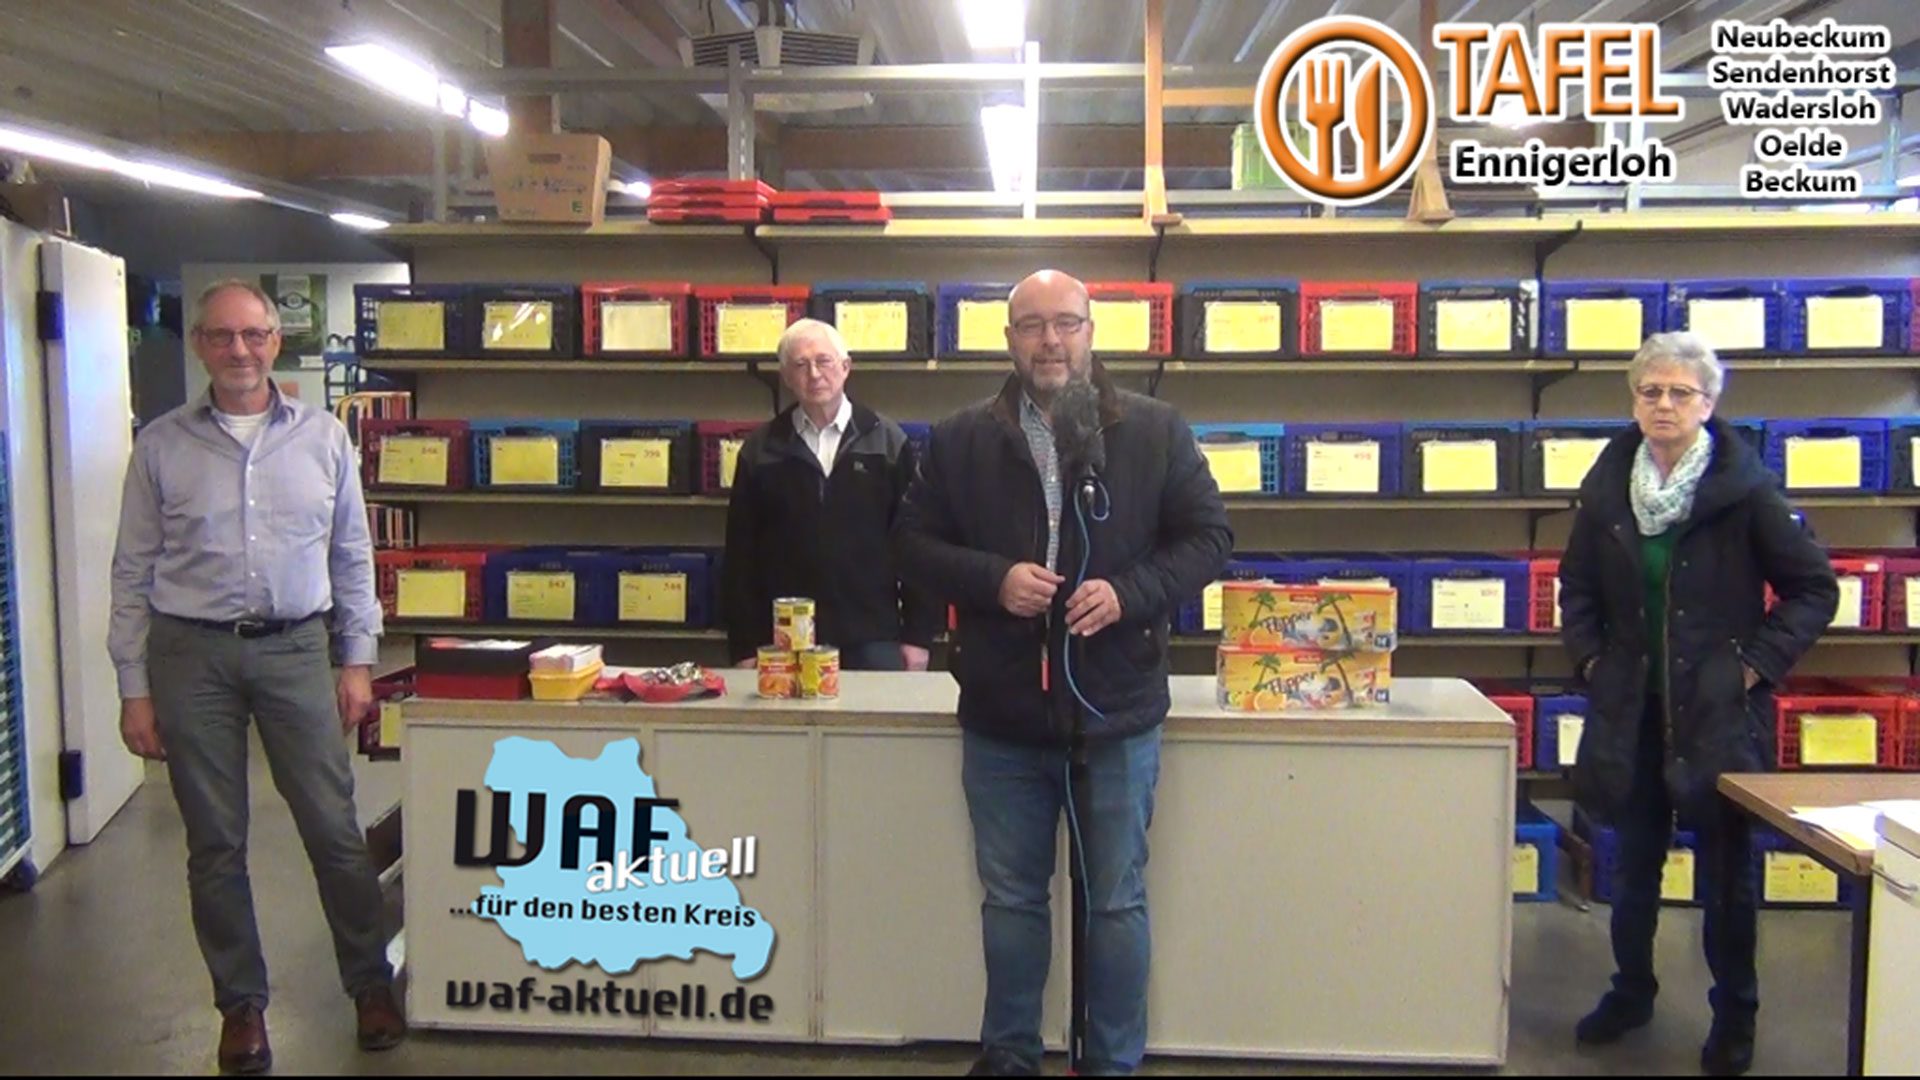 WAF-Aktuell.de besuchte die Tafel Ennigerloh e.V.